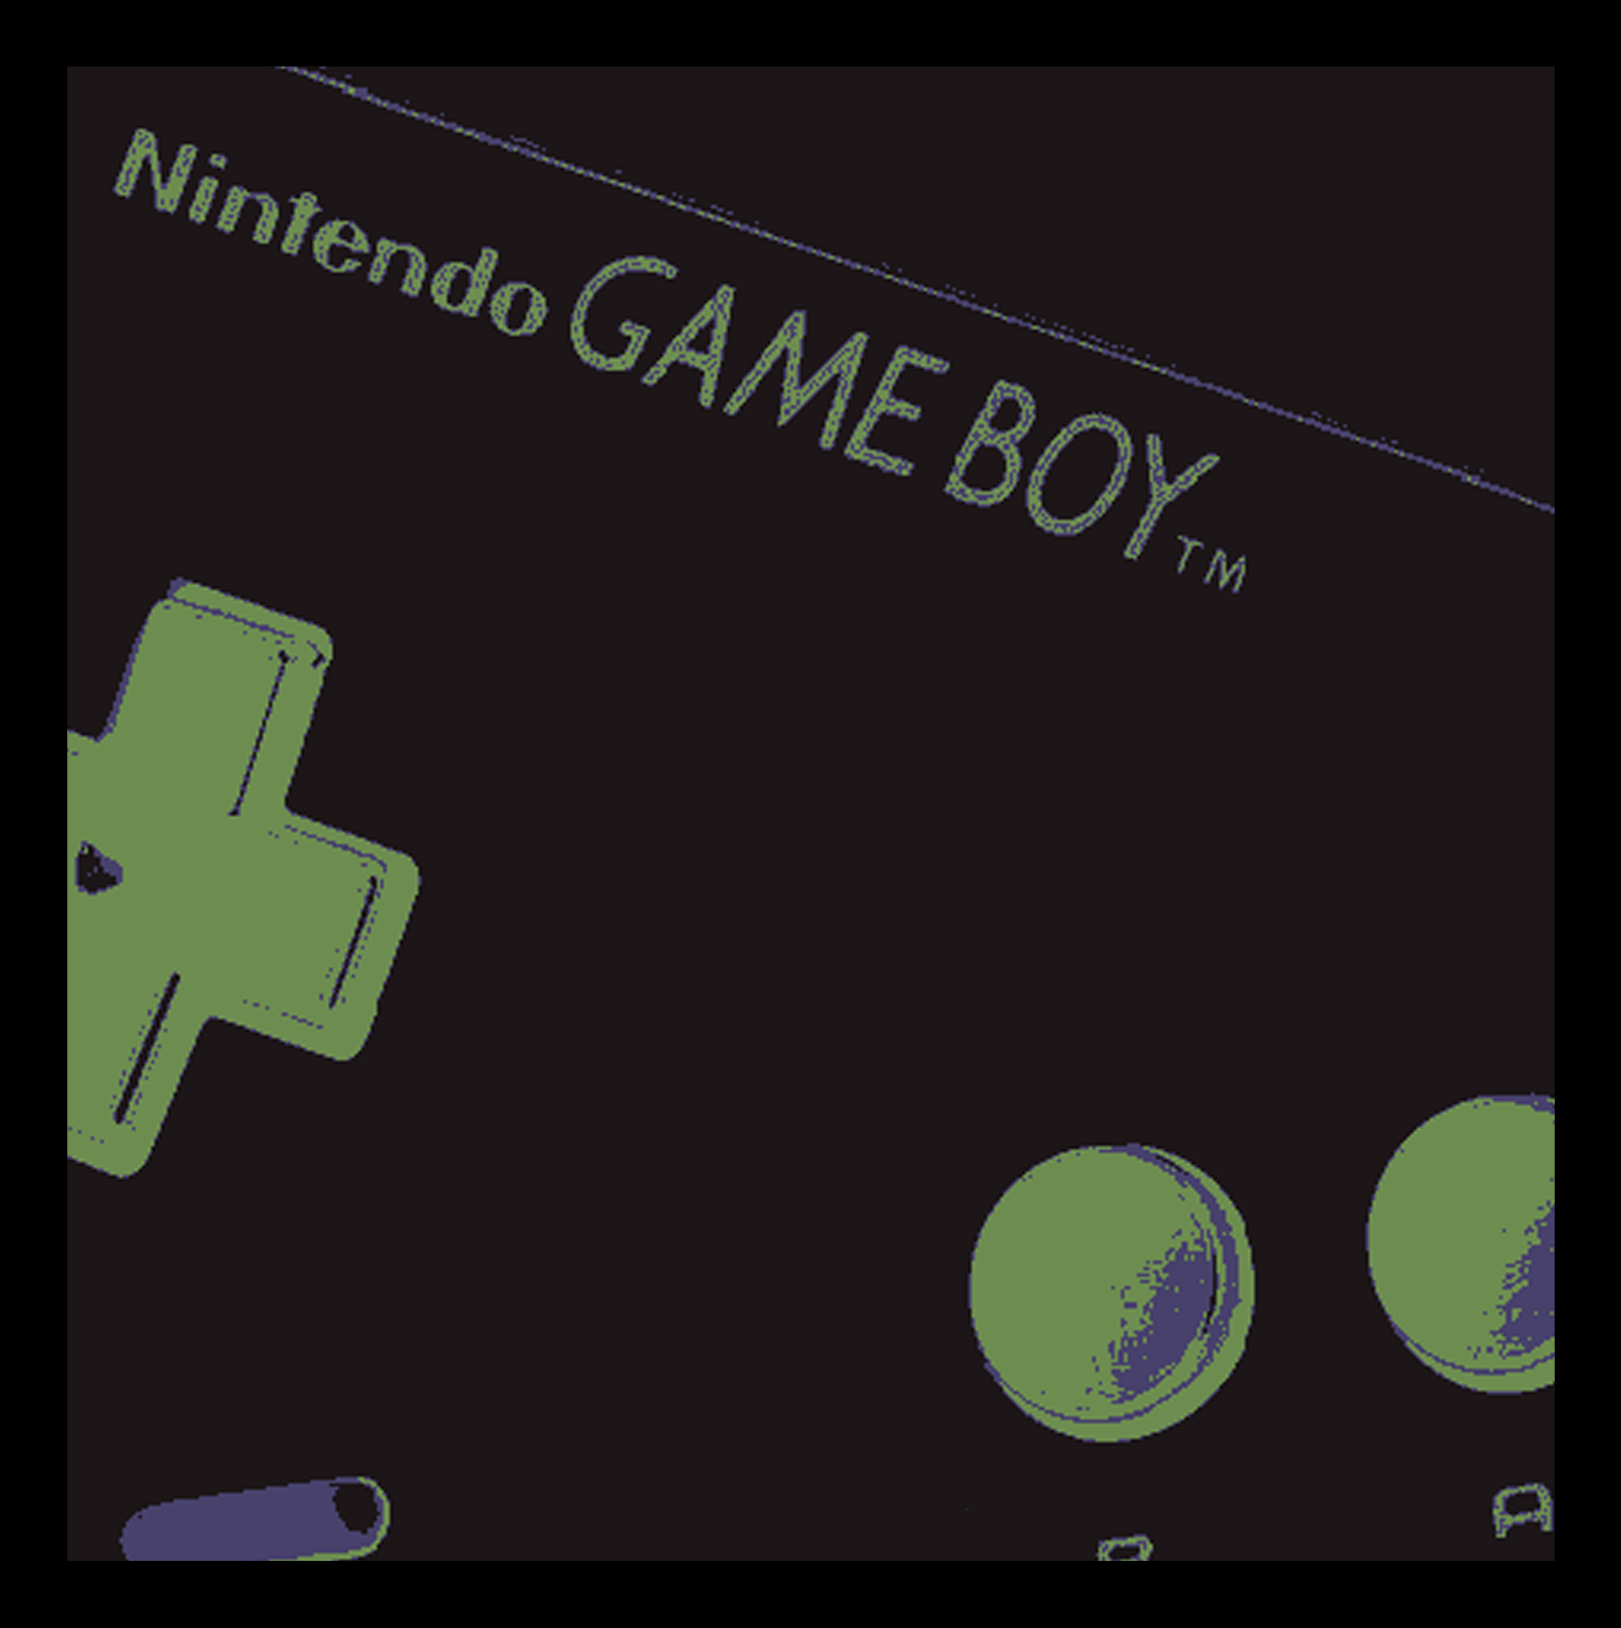 NintendoGameboy